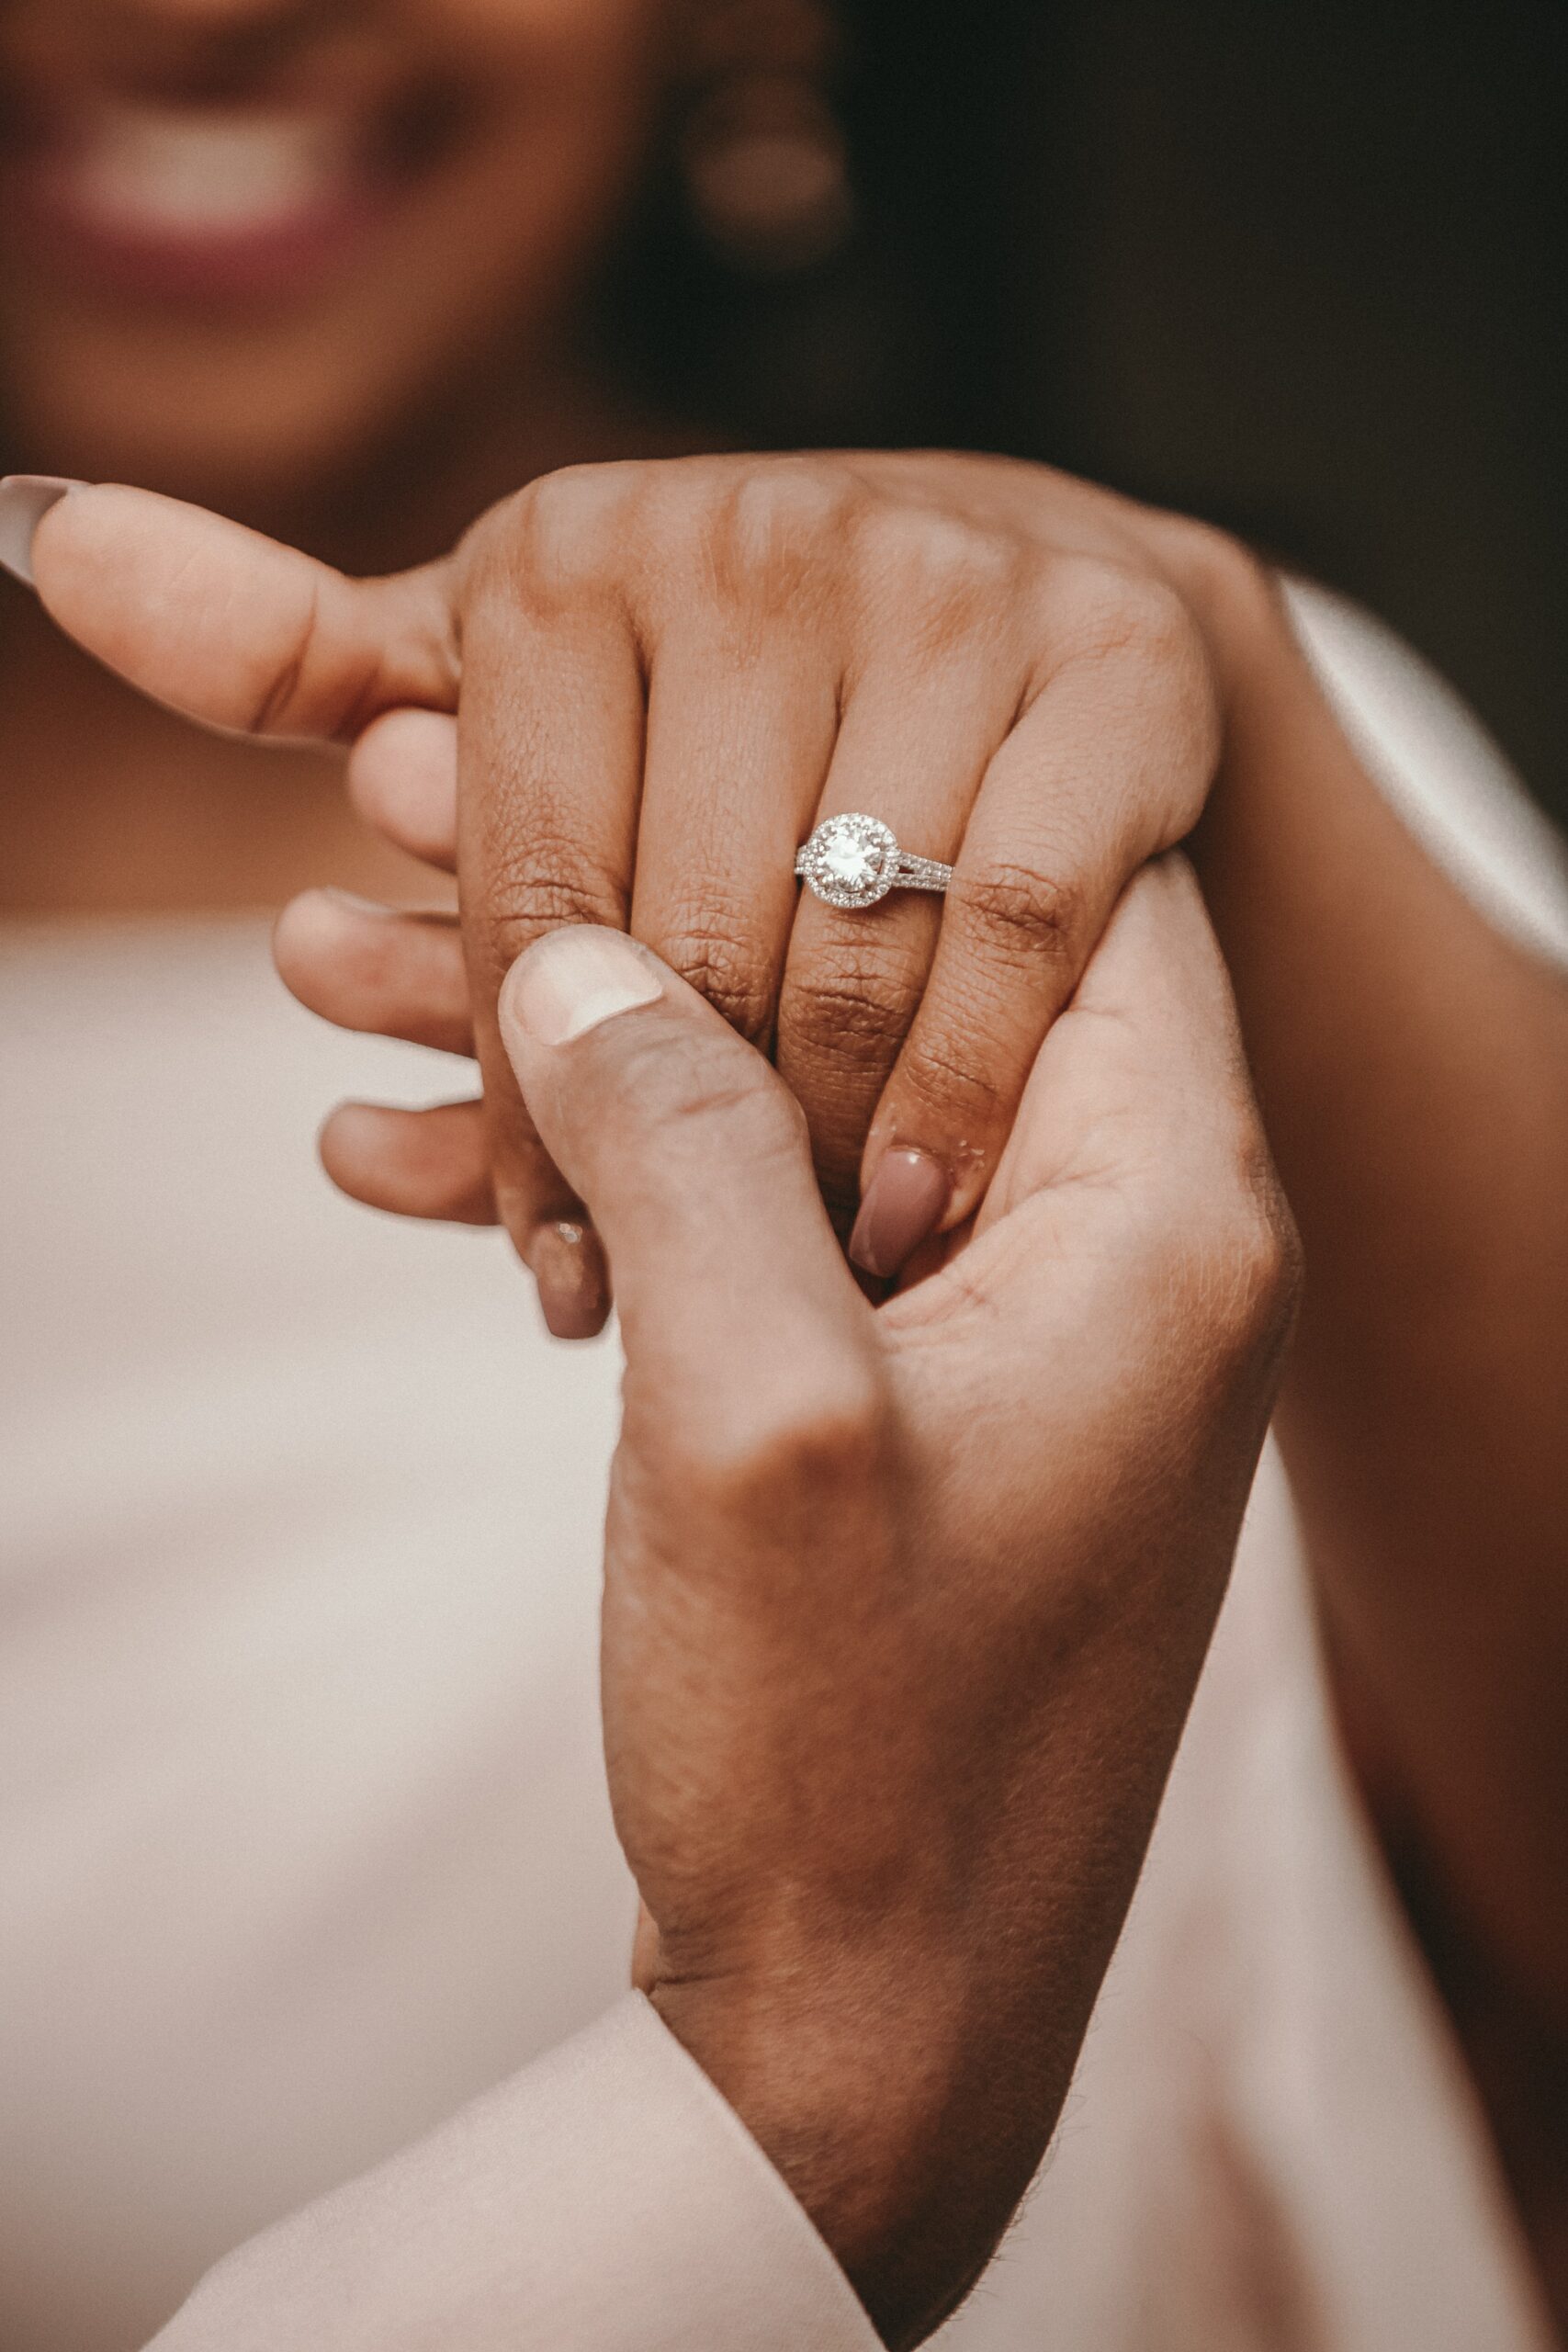 Con Qué Tipo De Anillo Deberías Proponer Matrimonio?: Nuestra Guía Anillos - Ready To Ask What Kind Of Ring Should You Propose With?: Our Ring Guide